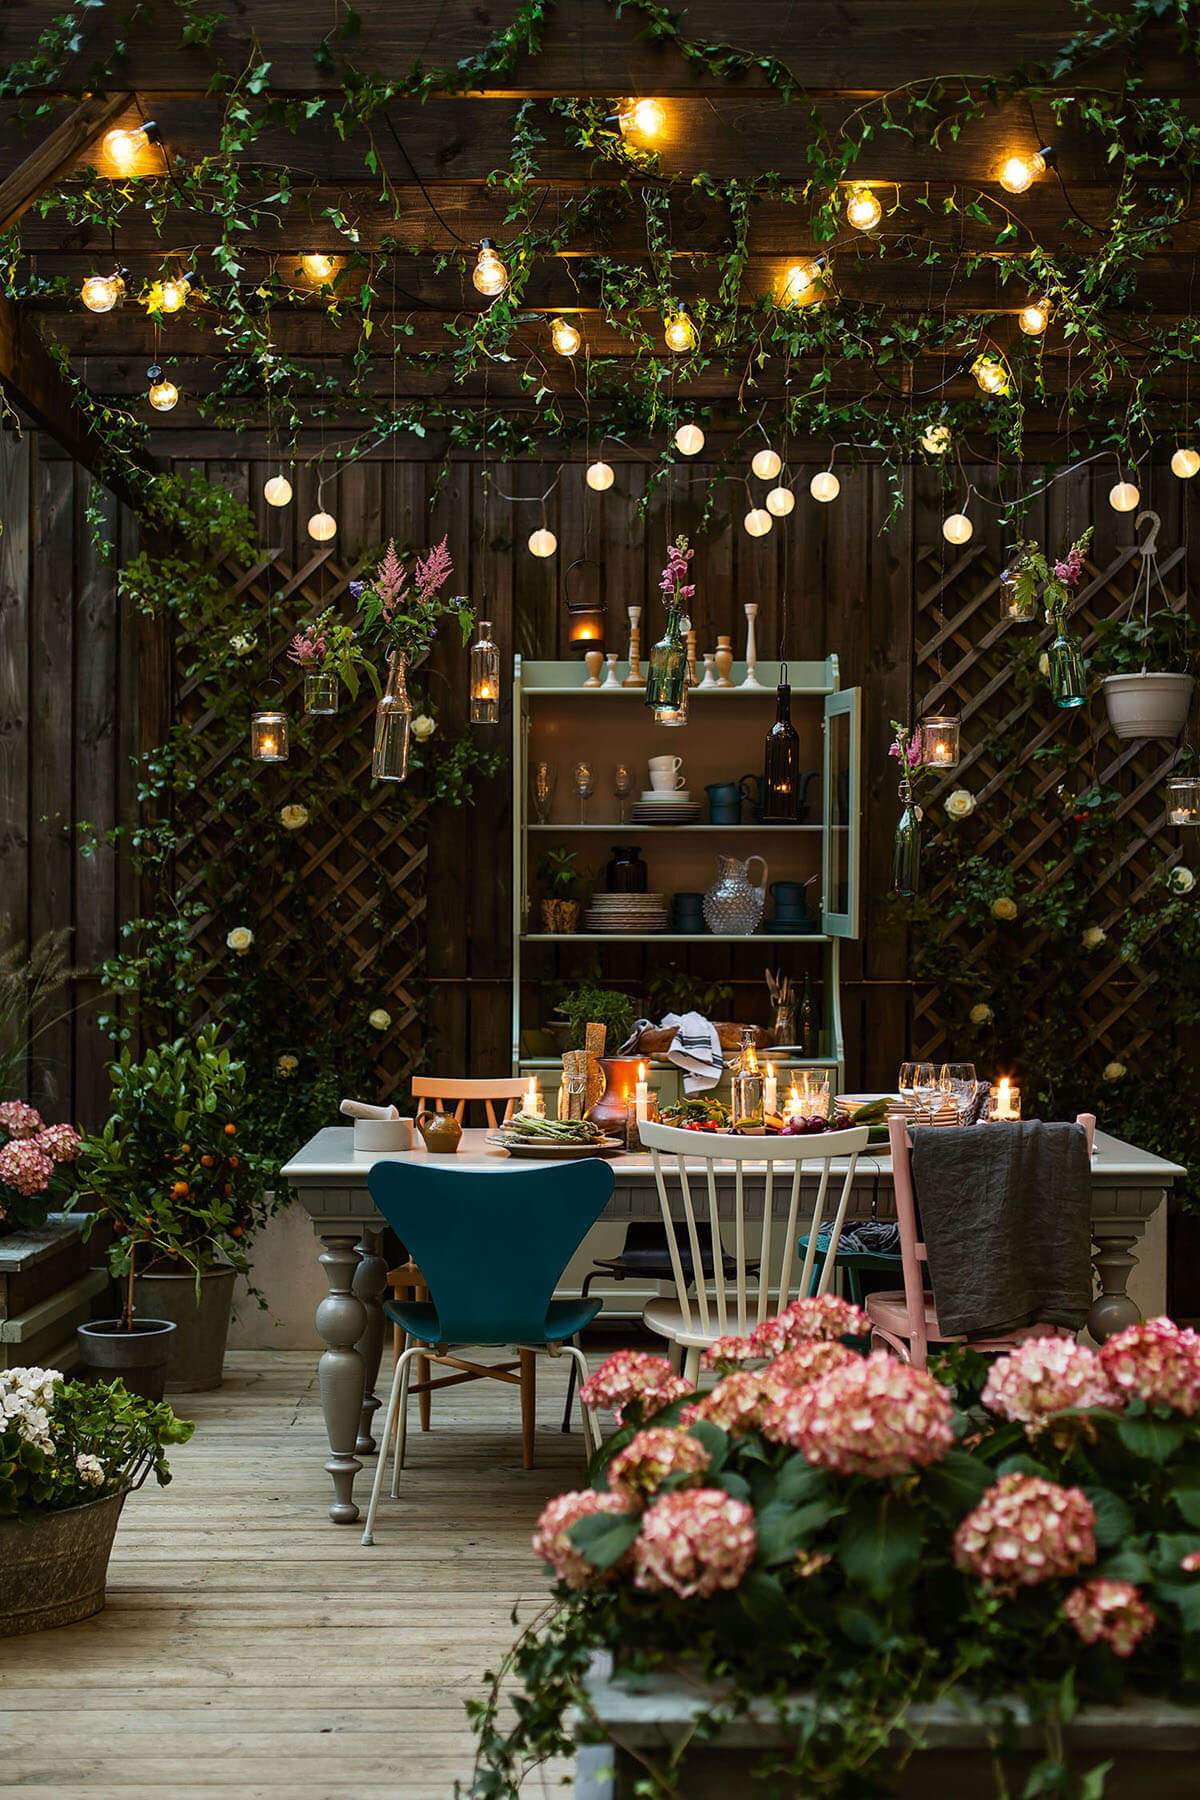 Best ideas about Backyard Light Ideas
. Save or Pin 27 Best Backyard Lighting Ideas and Designs for 2019 Now.